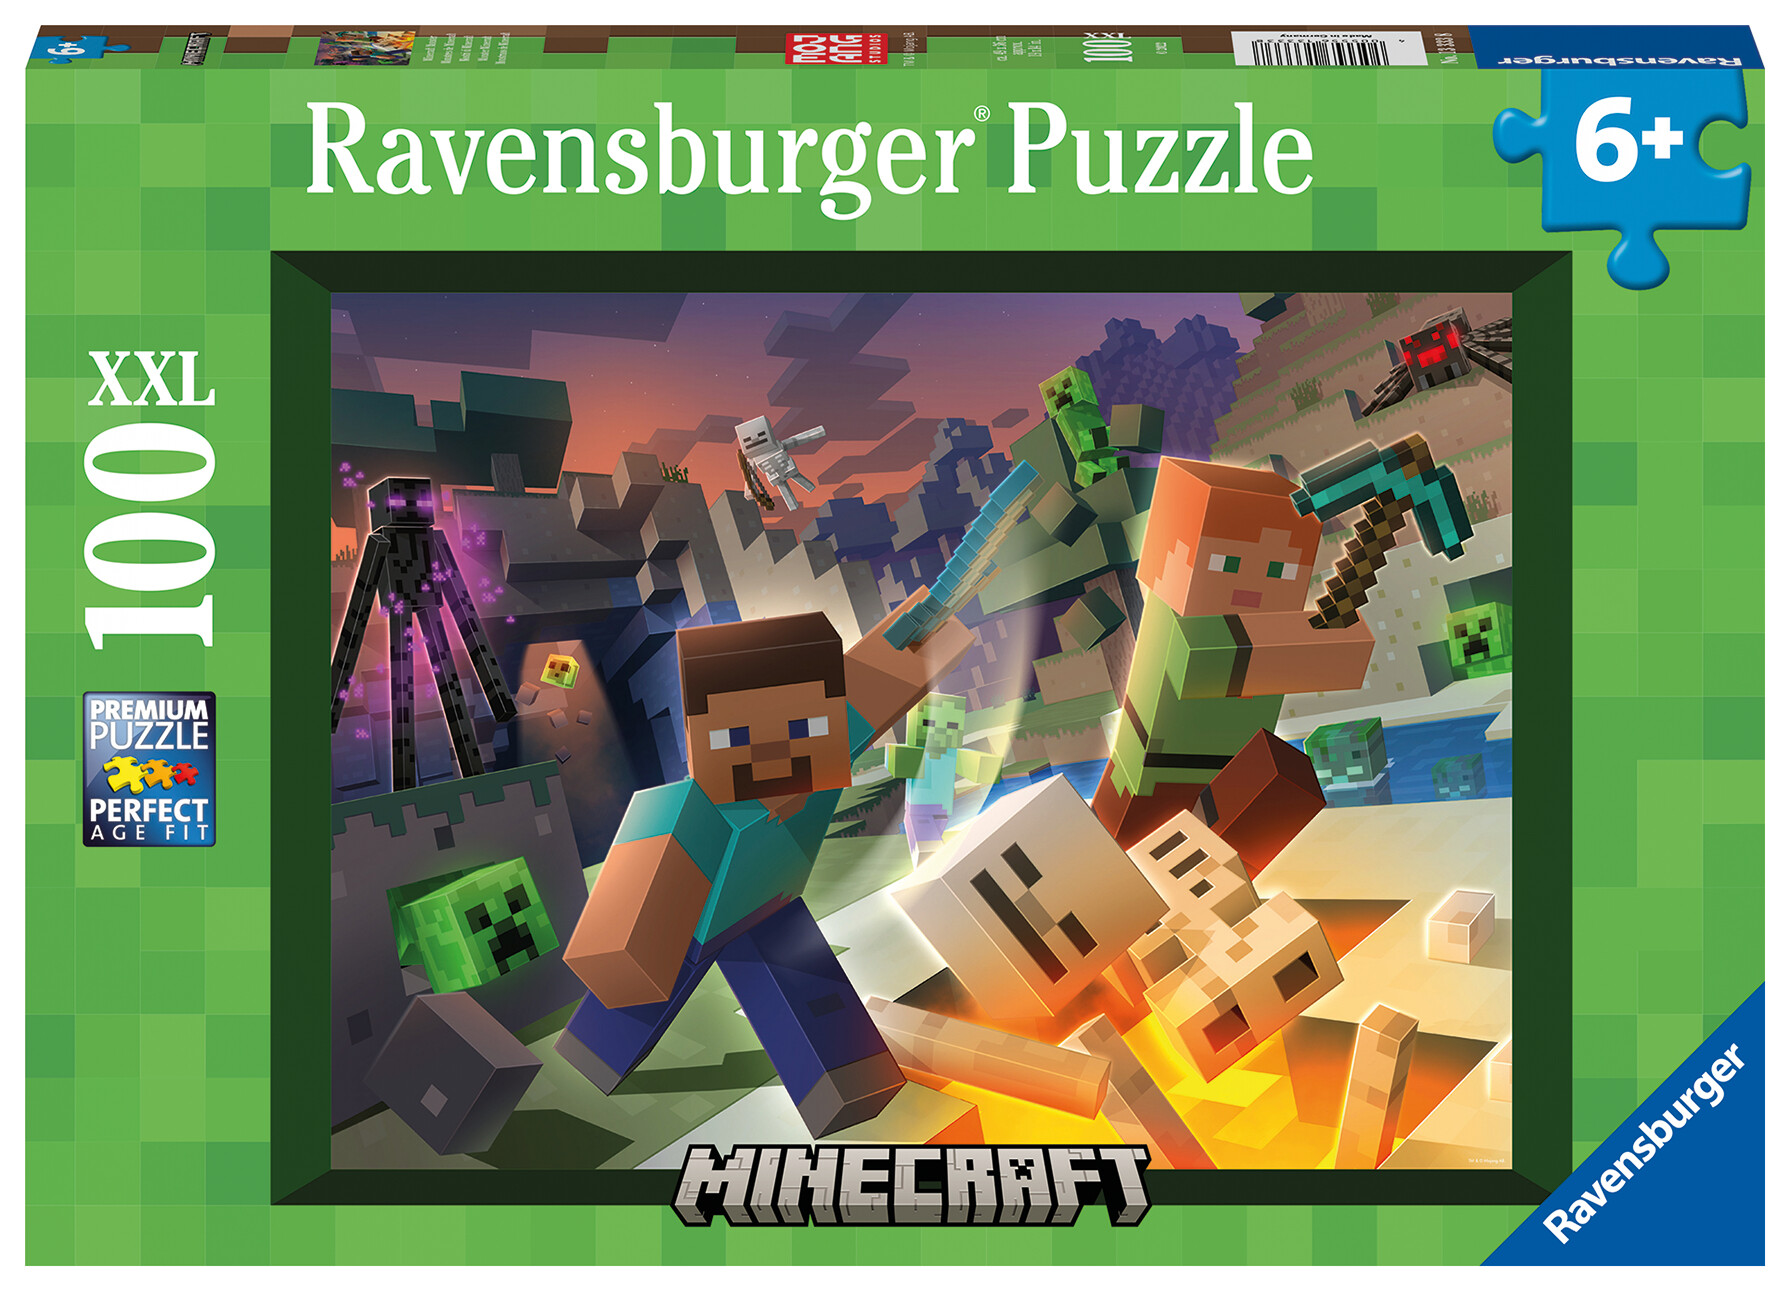 Ravensburger - puzzle minecraft, 100 pezzi xxl, età raccomandata 6+ anni - MINECRAFT, RAVENSBURGER